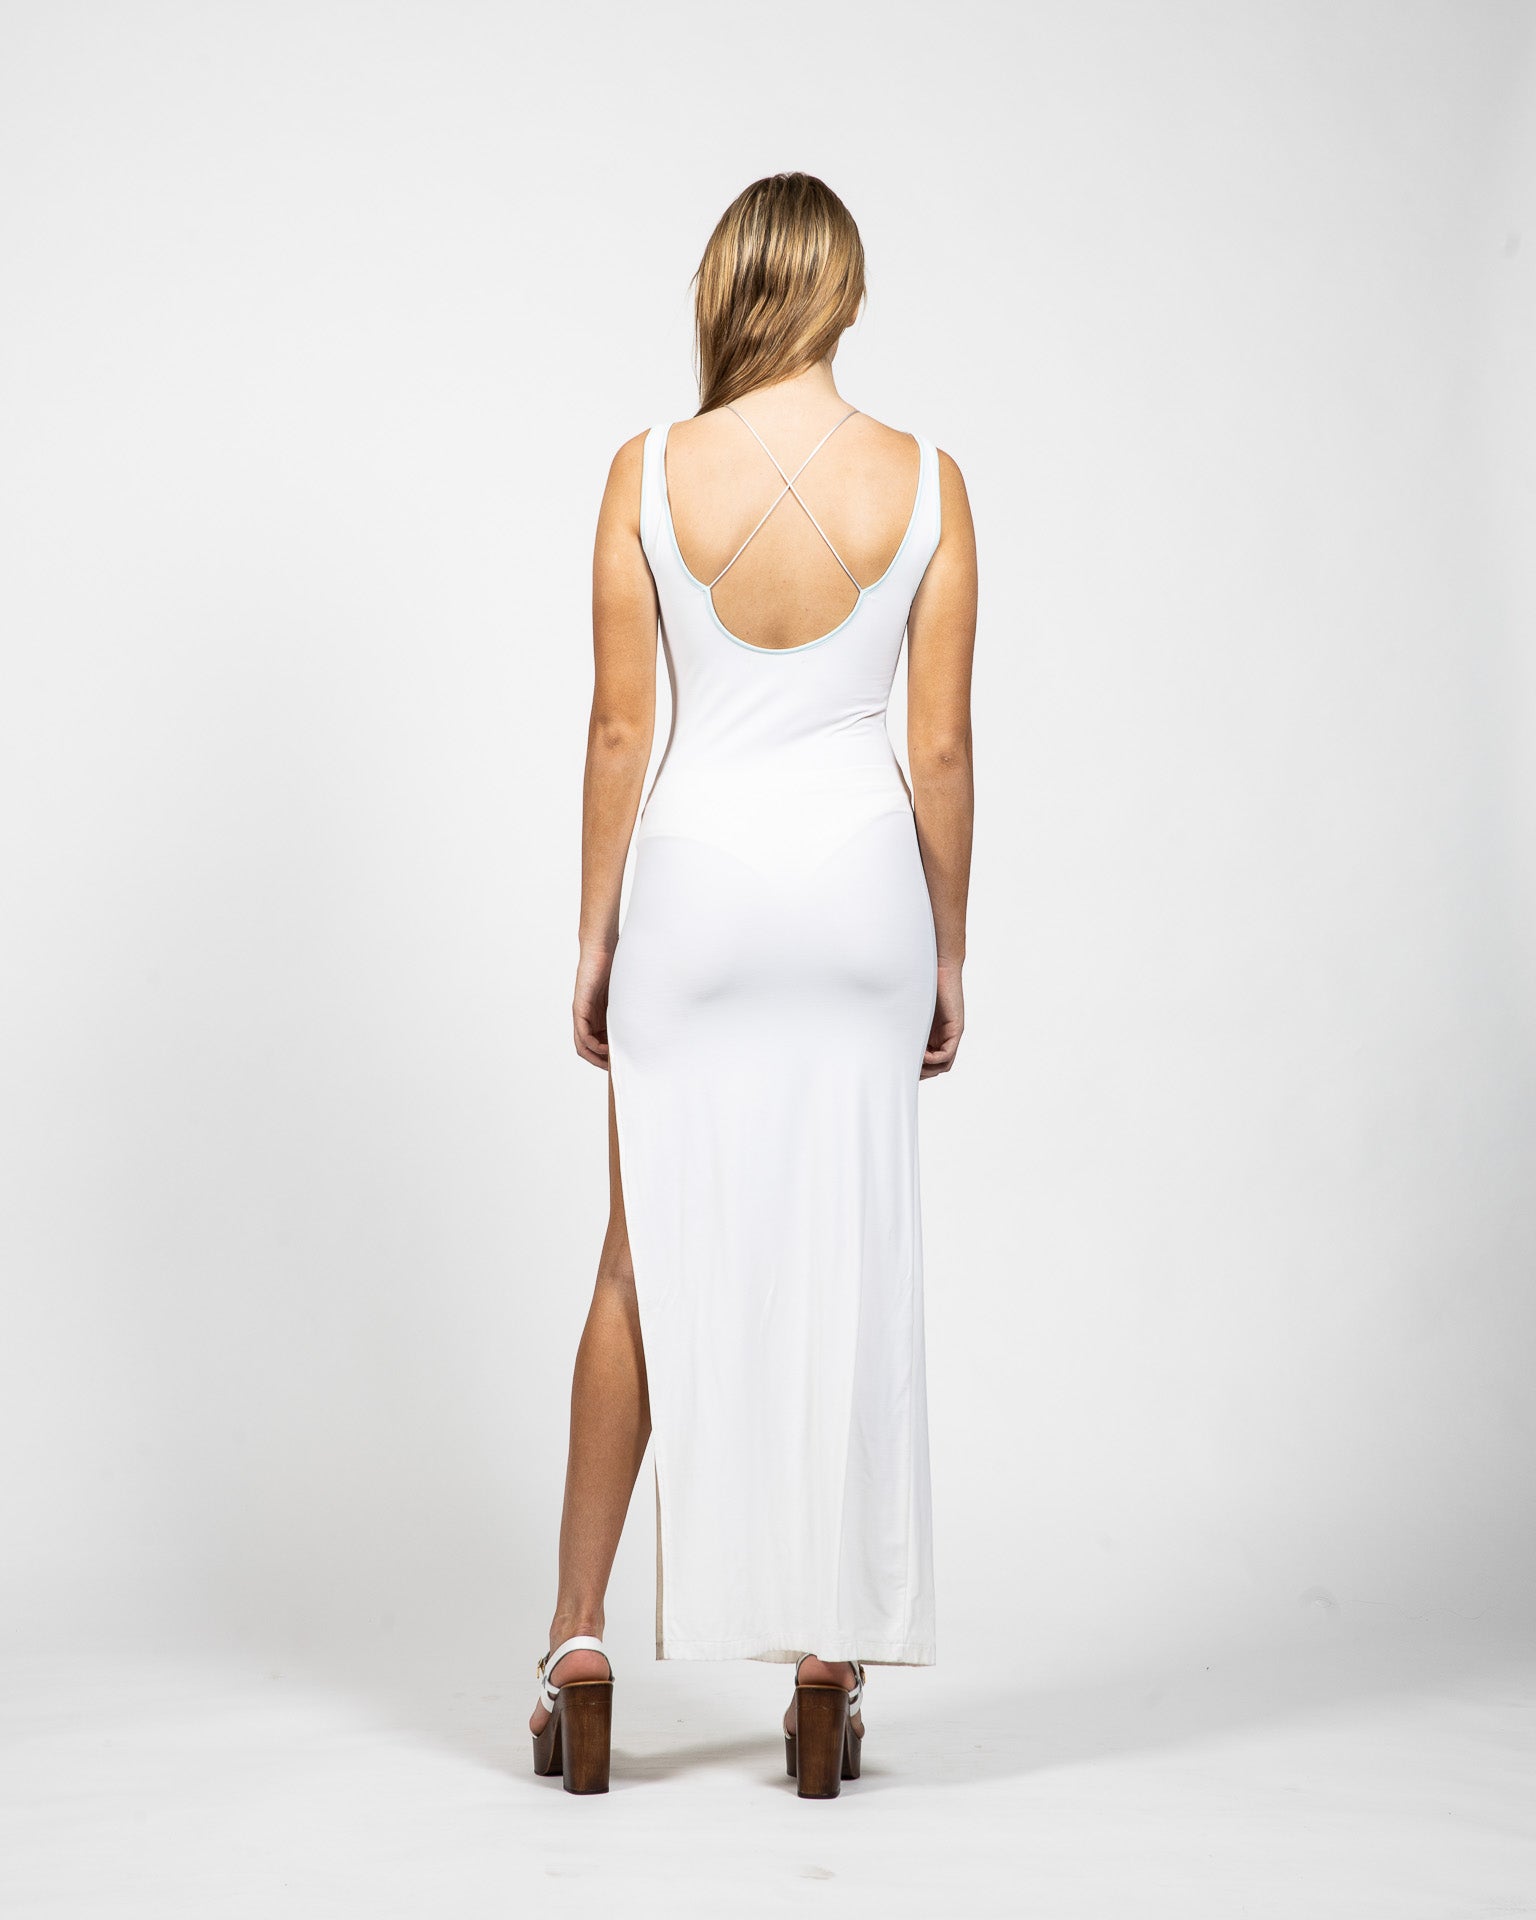 Long White Dress With Appliqued Neckline - Back View - Samuel Vartan